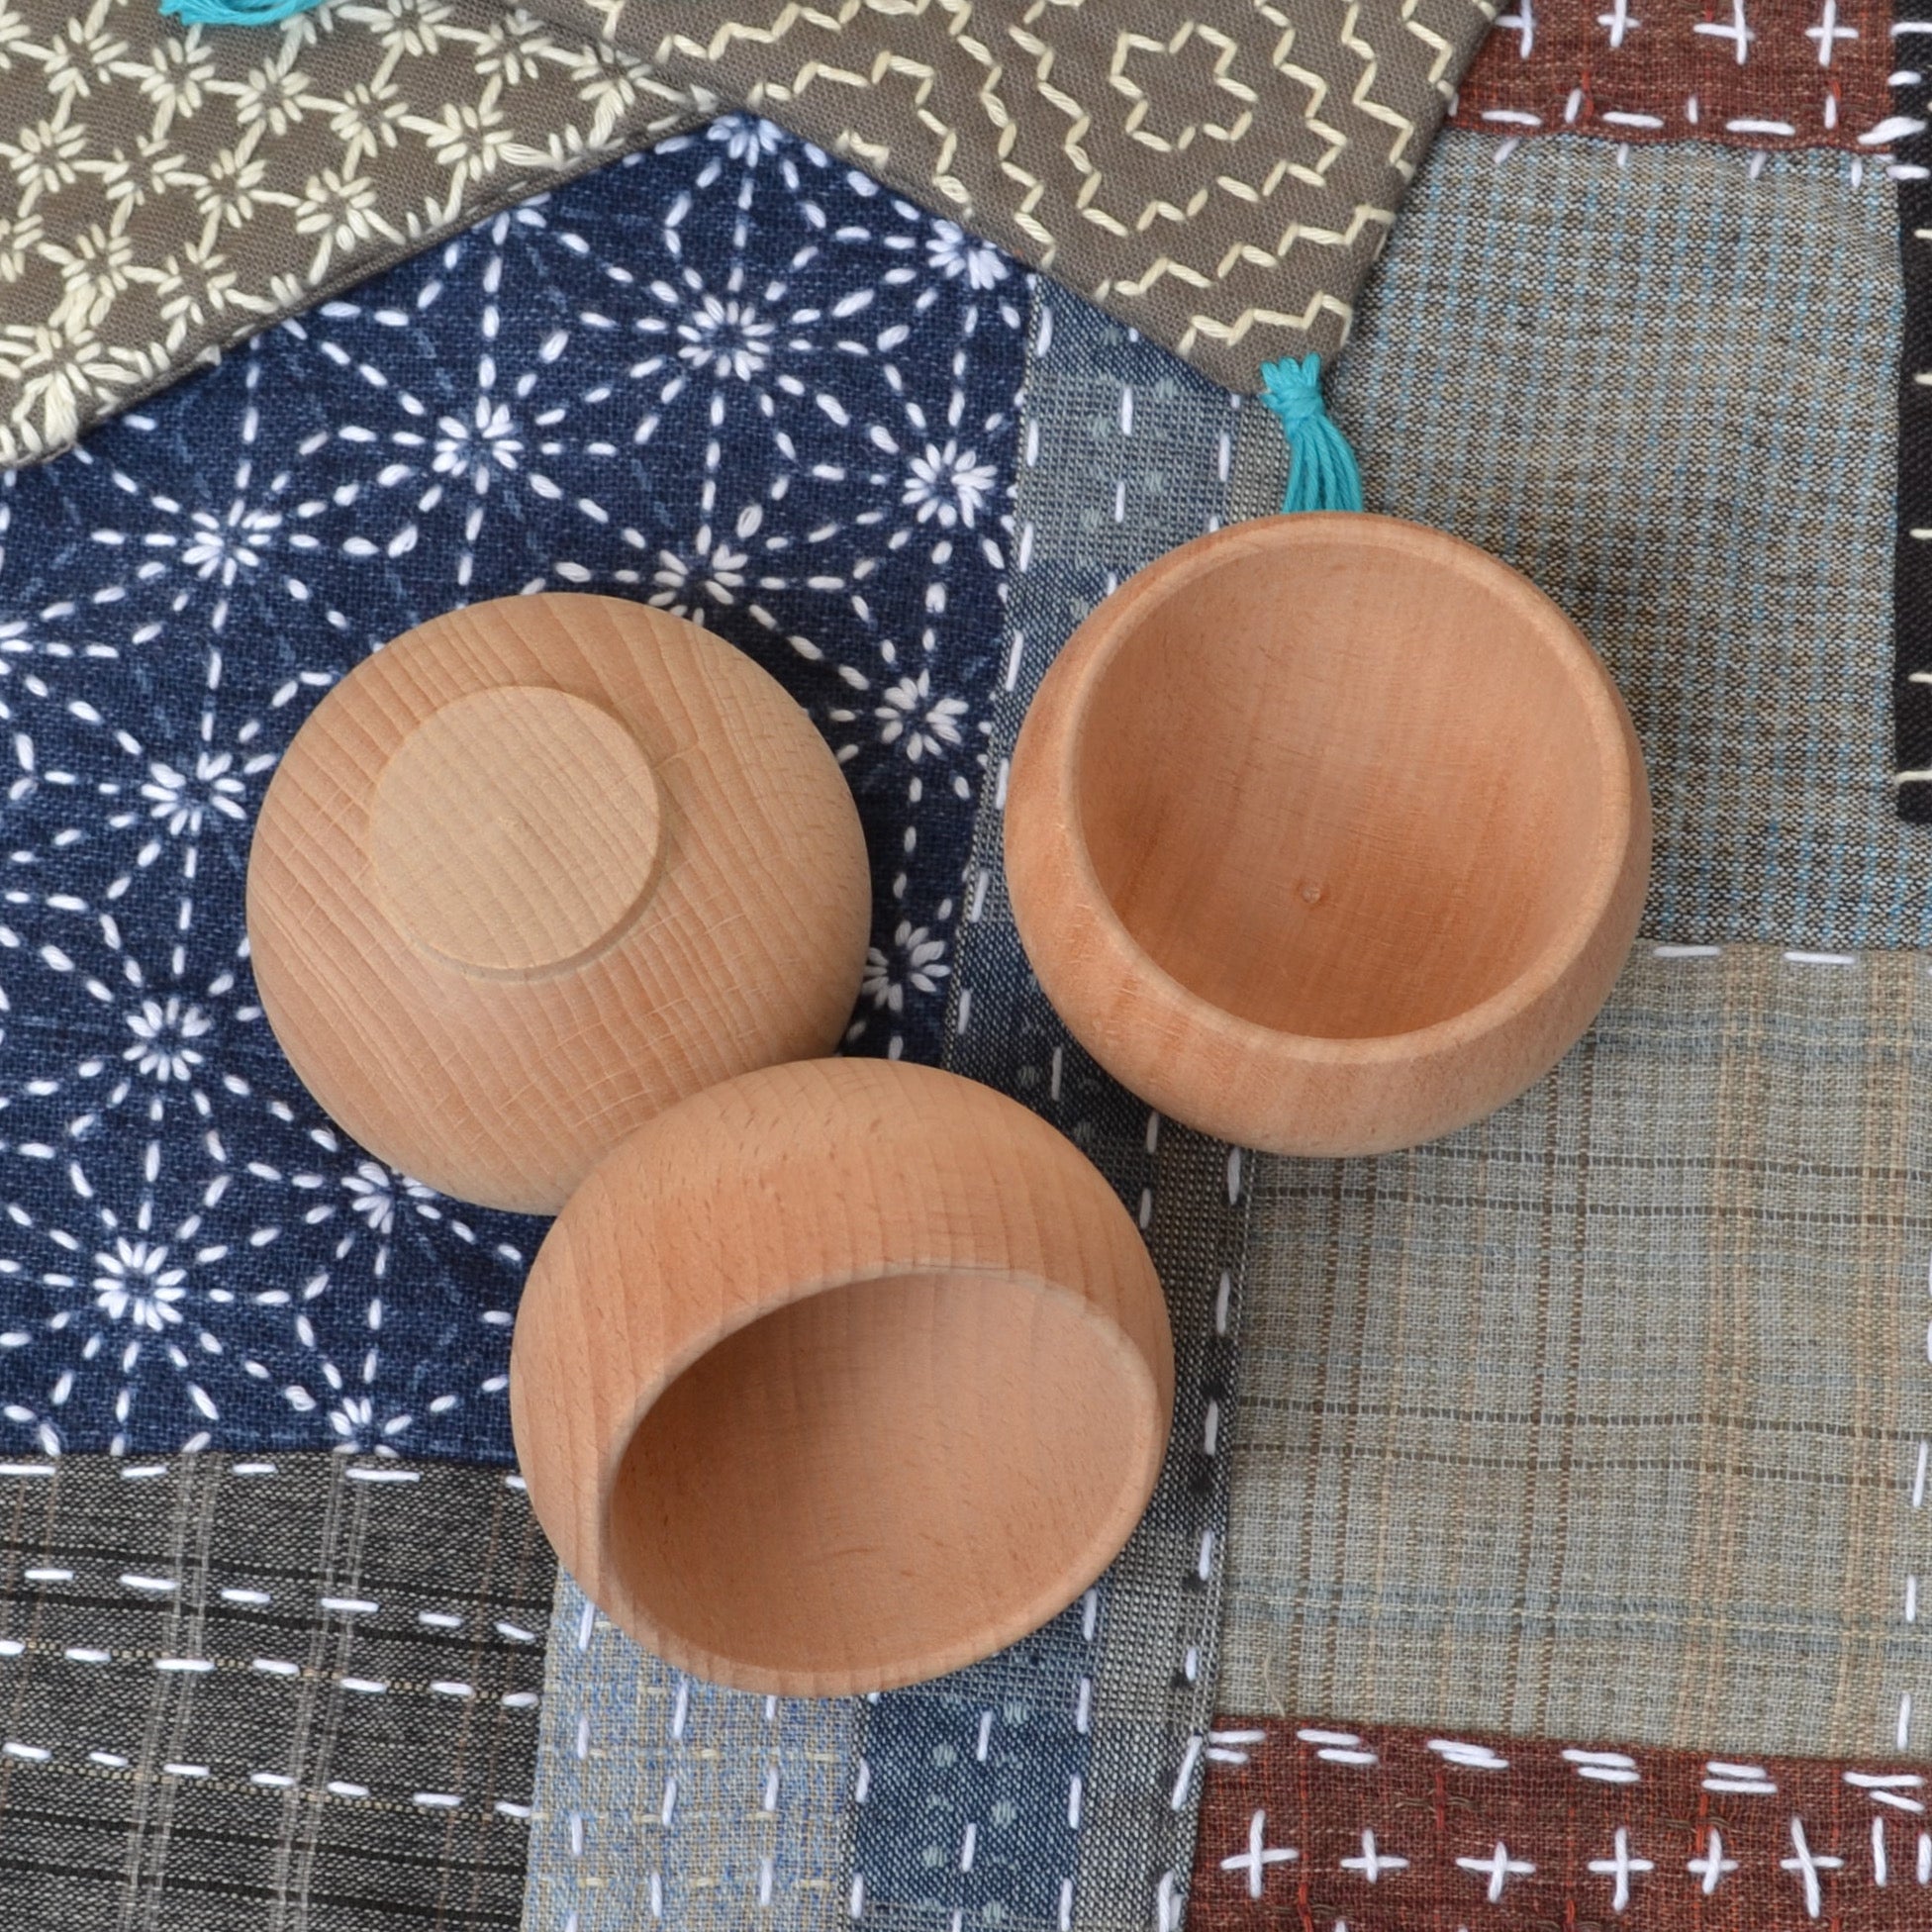 wood bowl for making Japanese pin cushion bowl